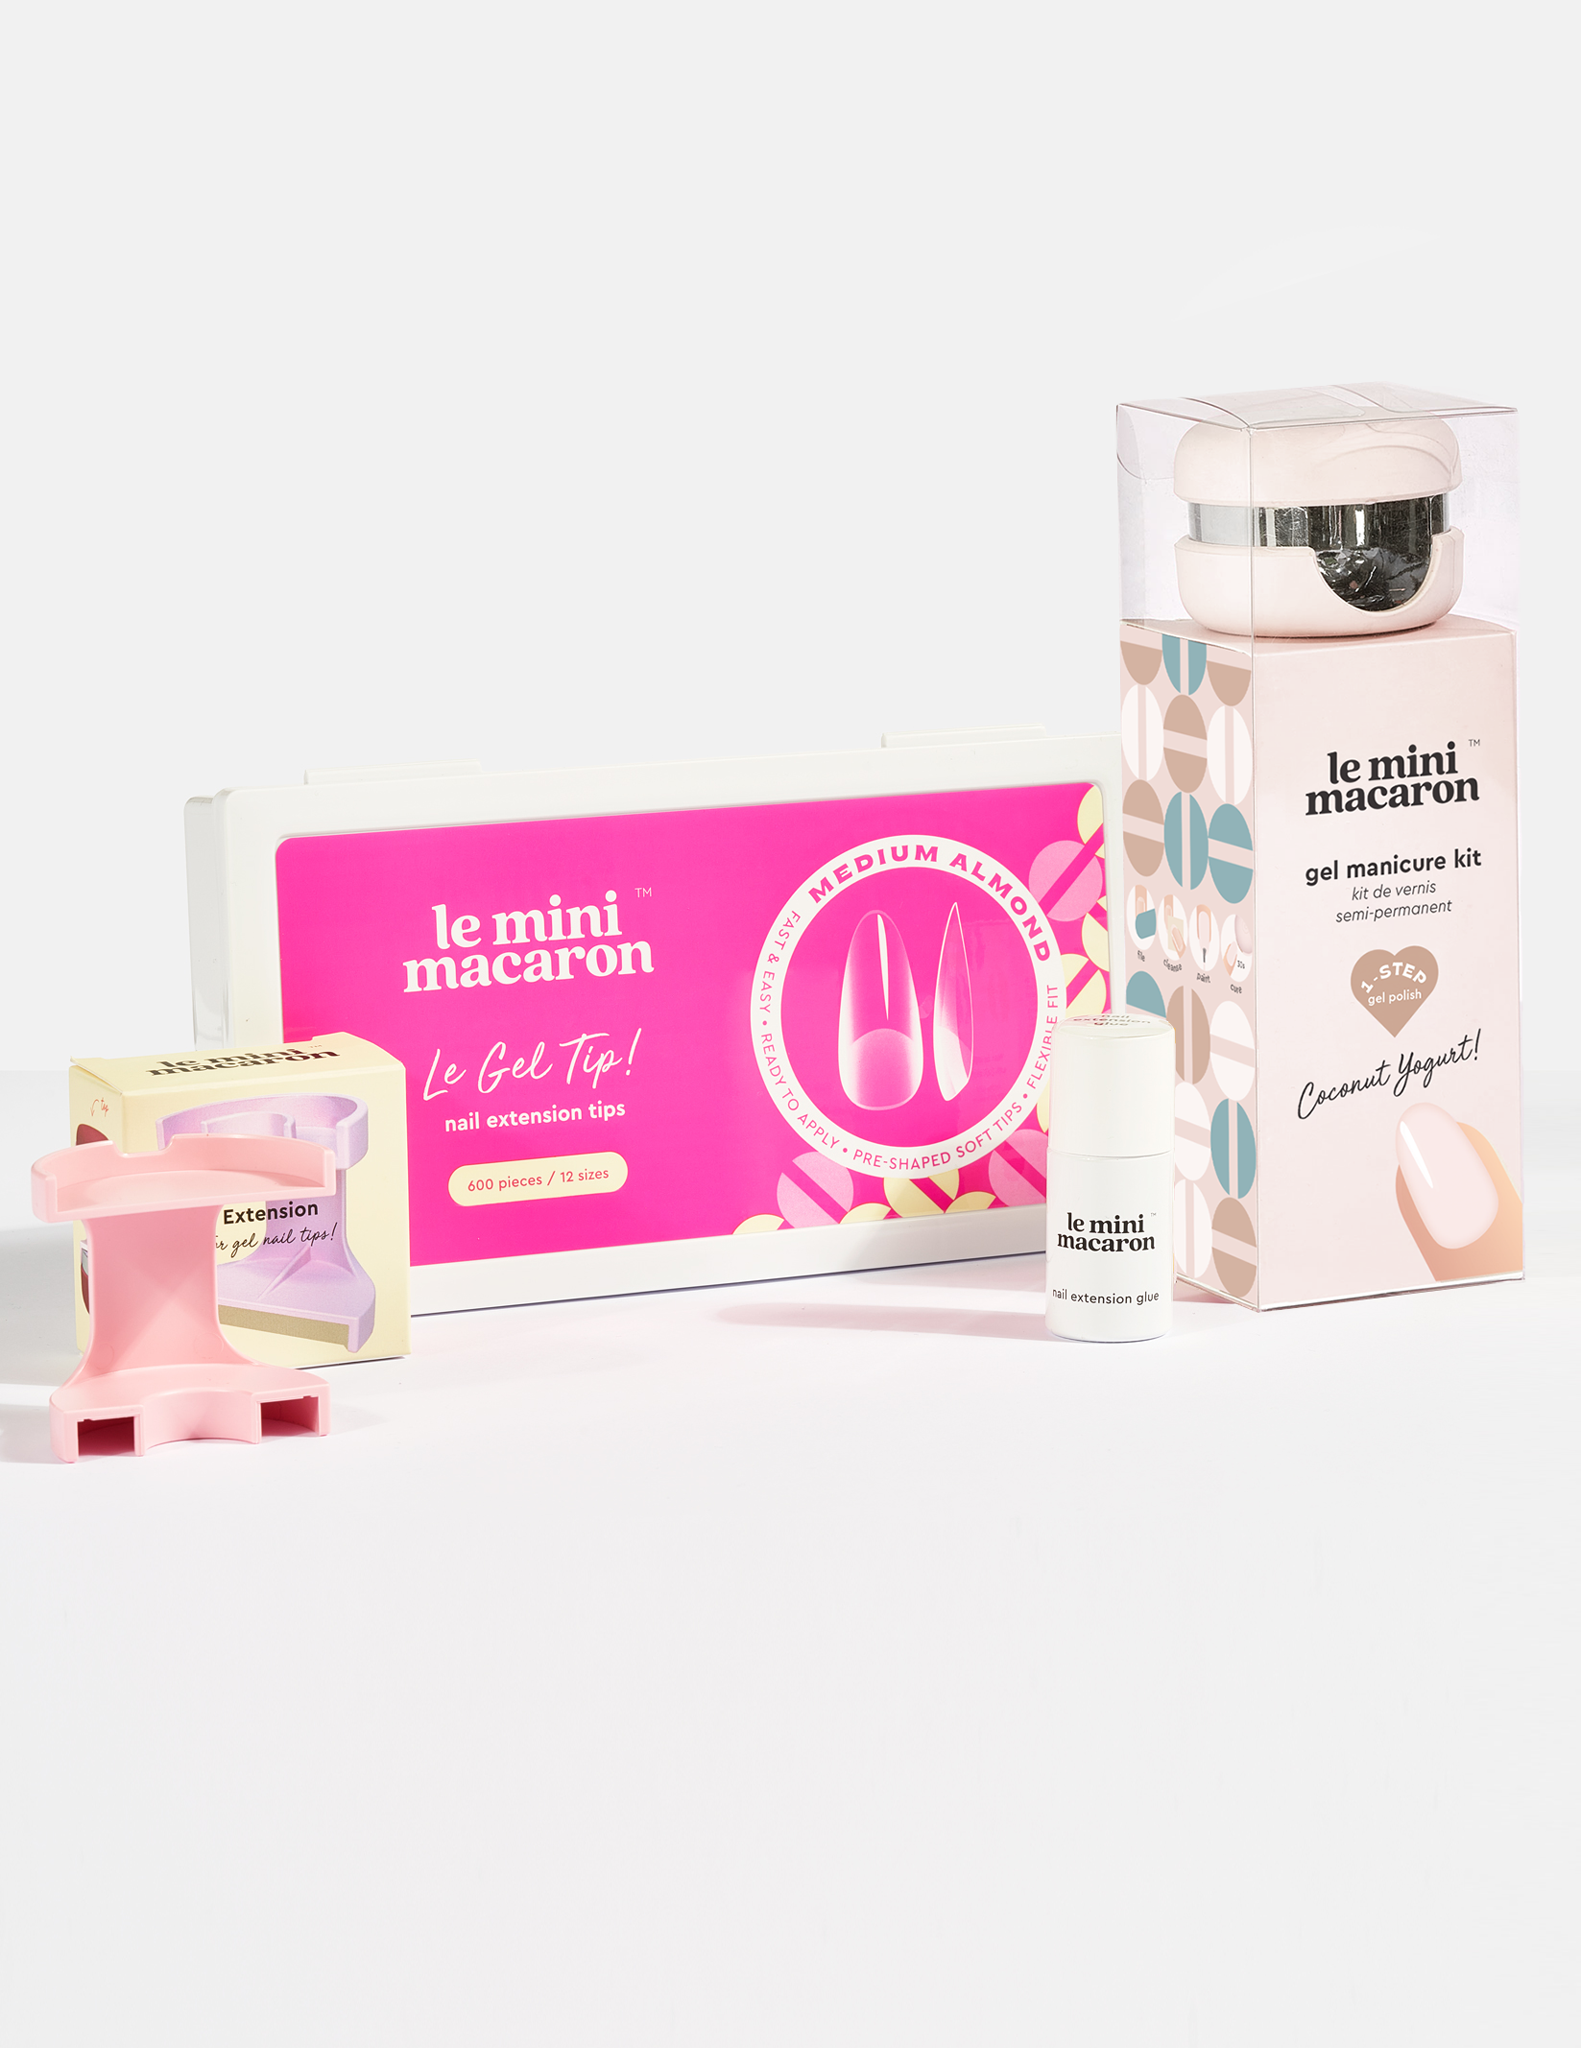 Coconut Yogurt Kit + Le Gel tips + Glue + Lamp Extension Bundle